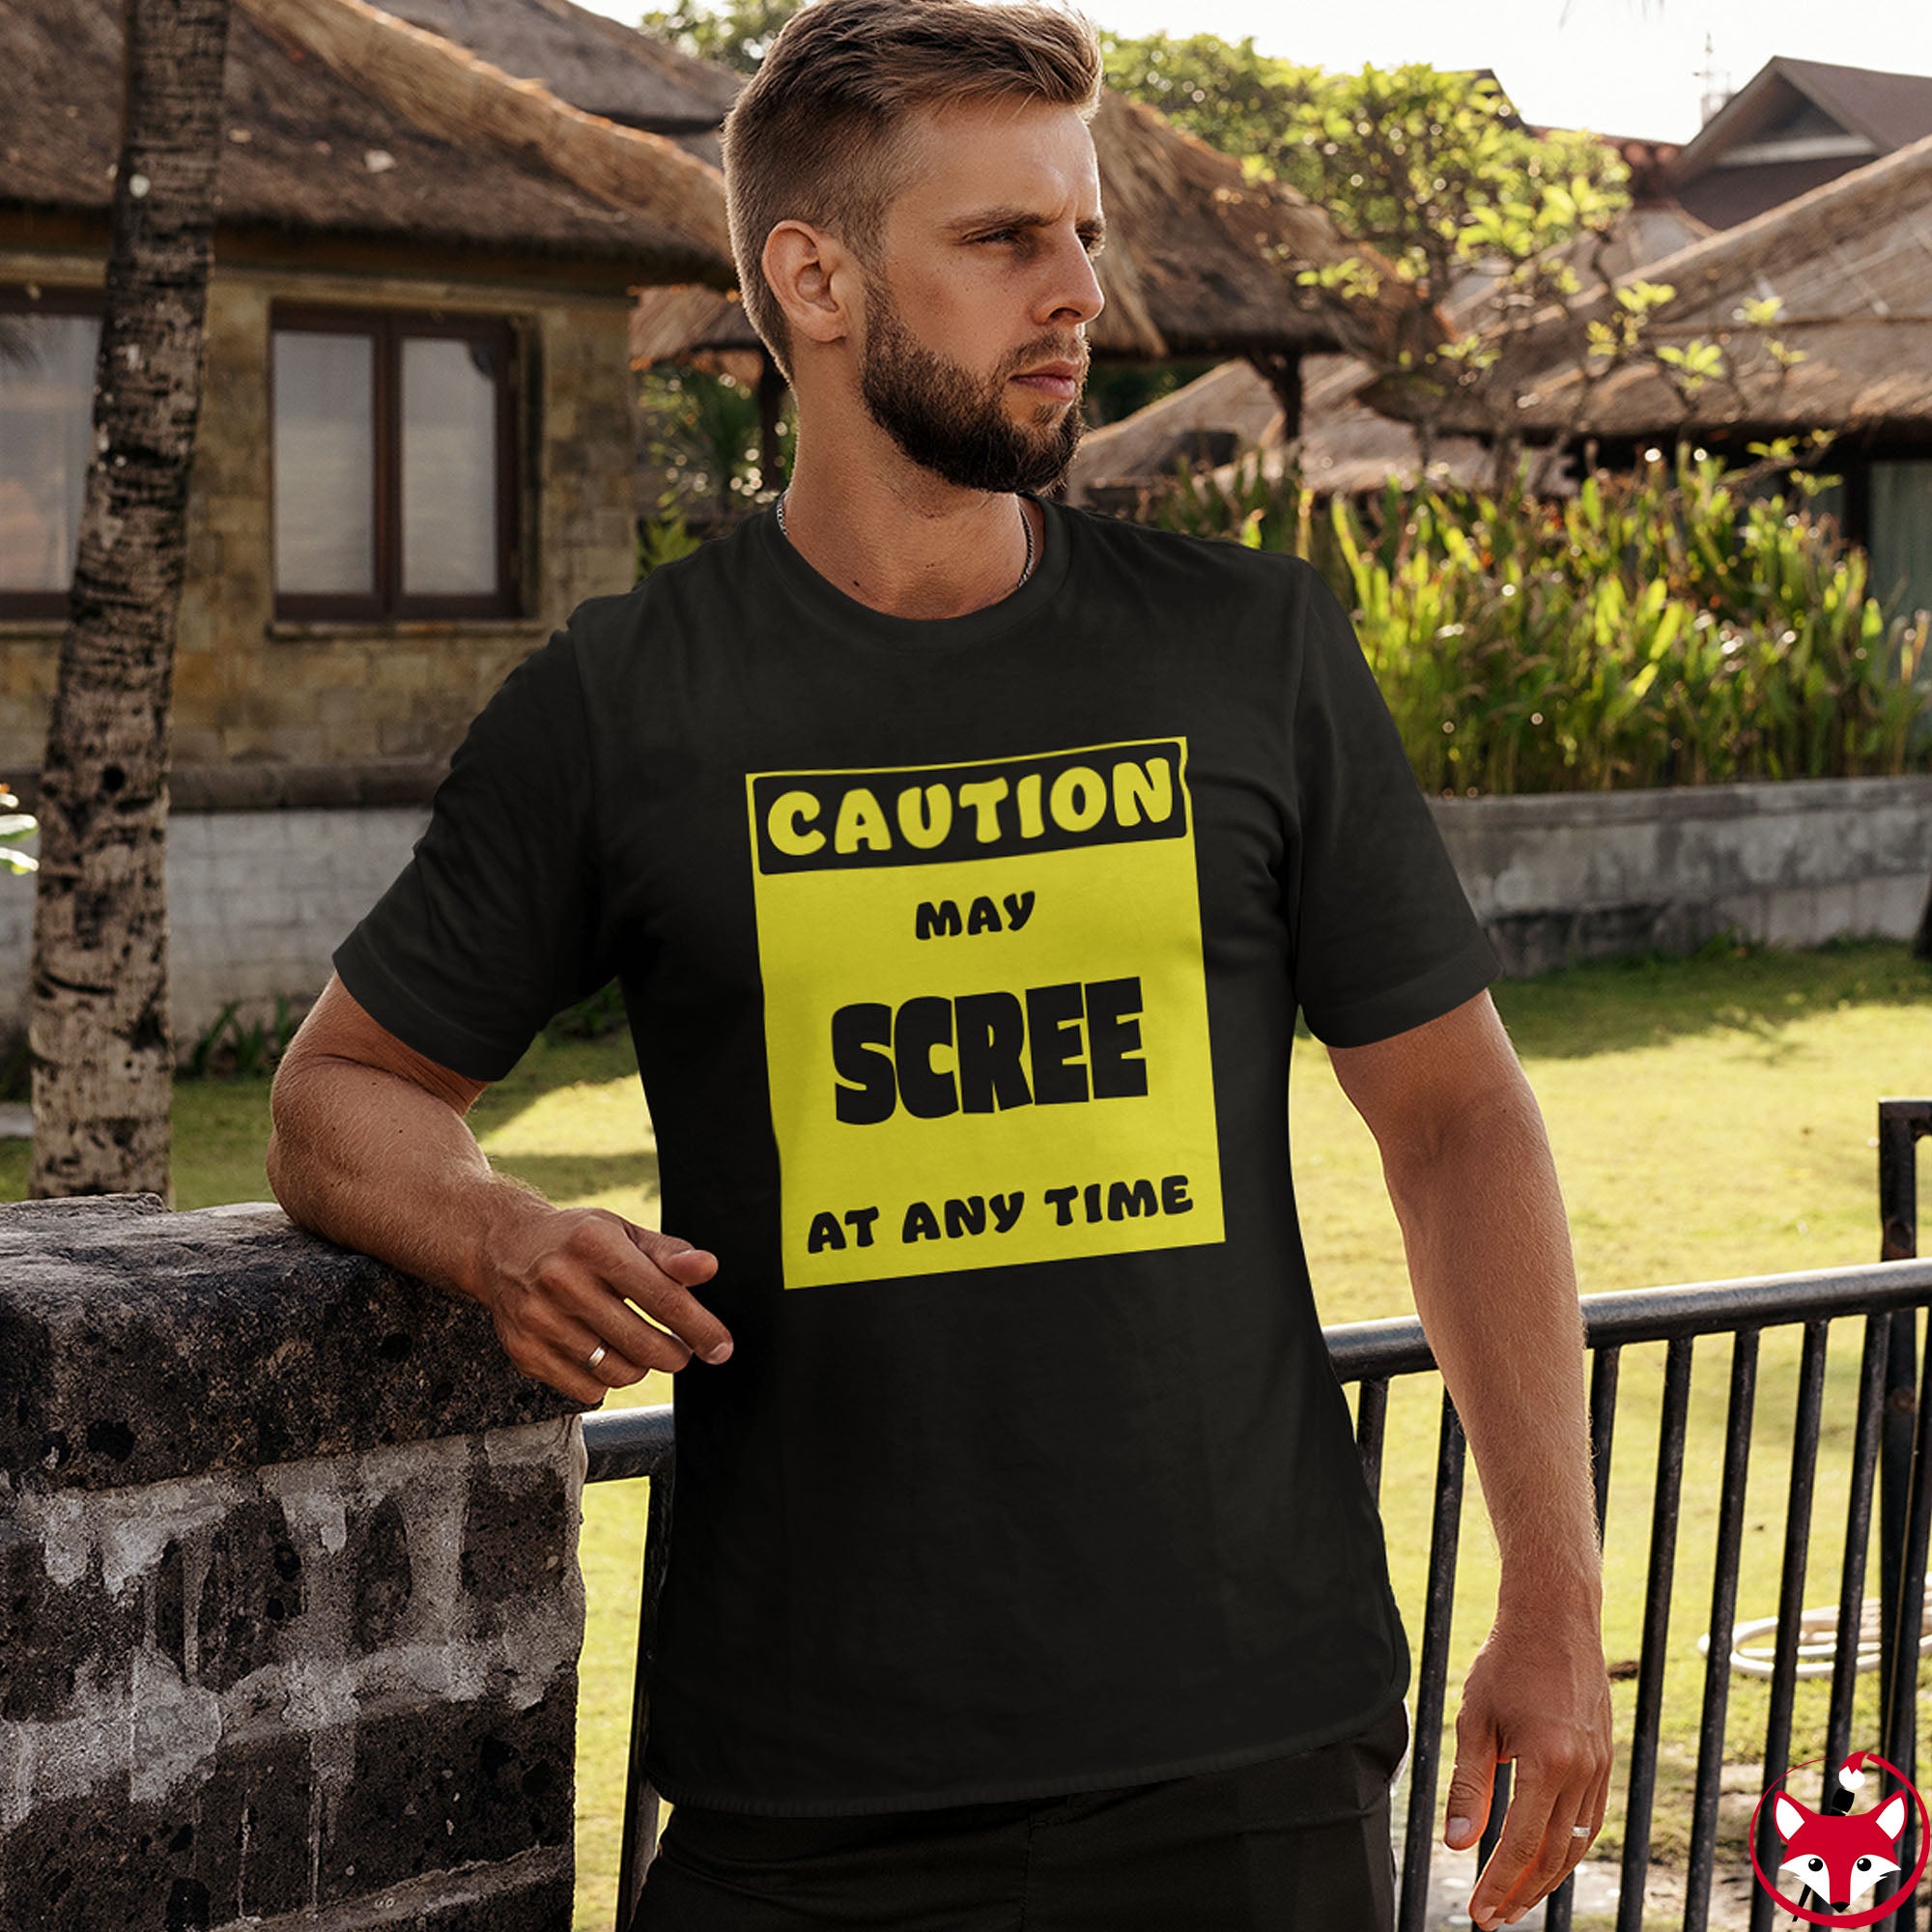 CAUTION! May SCREE at any time! - T-Shirt T-Shirt AFLT-Whootorca 